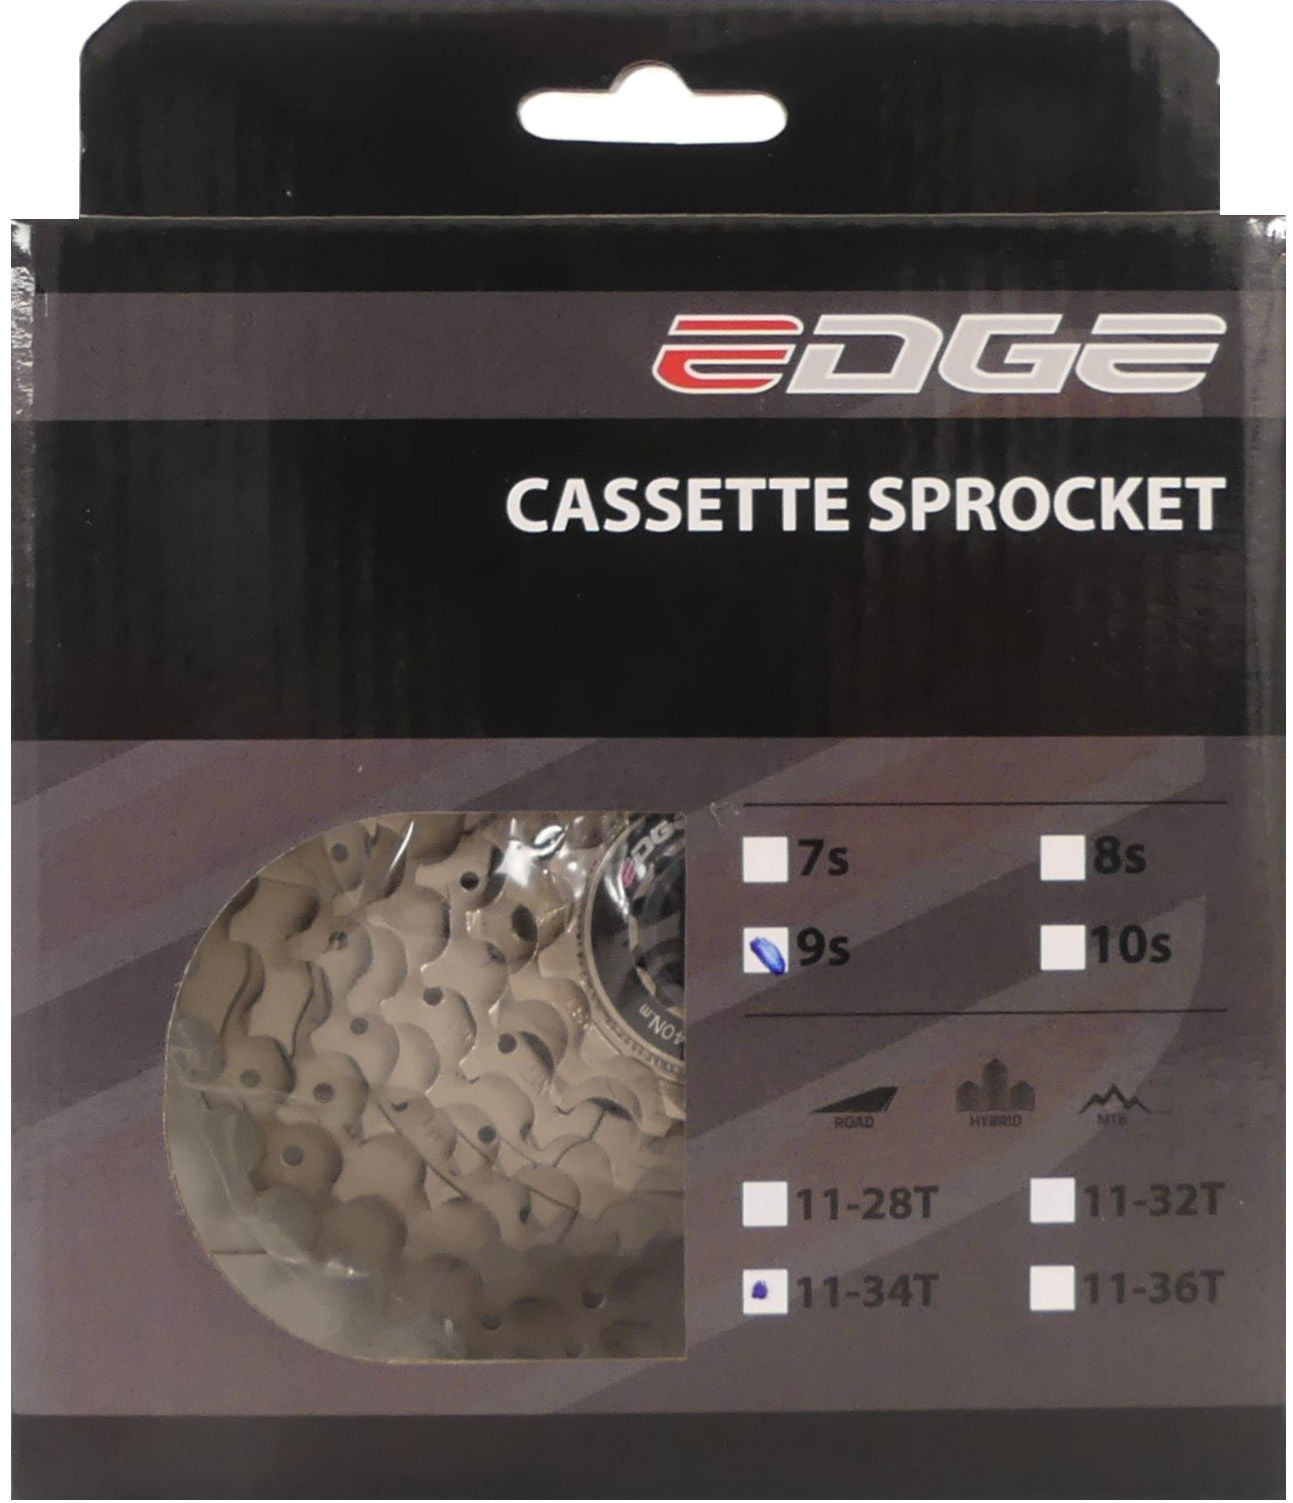 Edge Cassette 9 speed CS-M5009 11-34T zilver